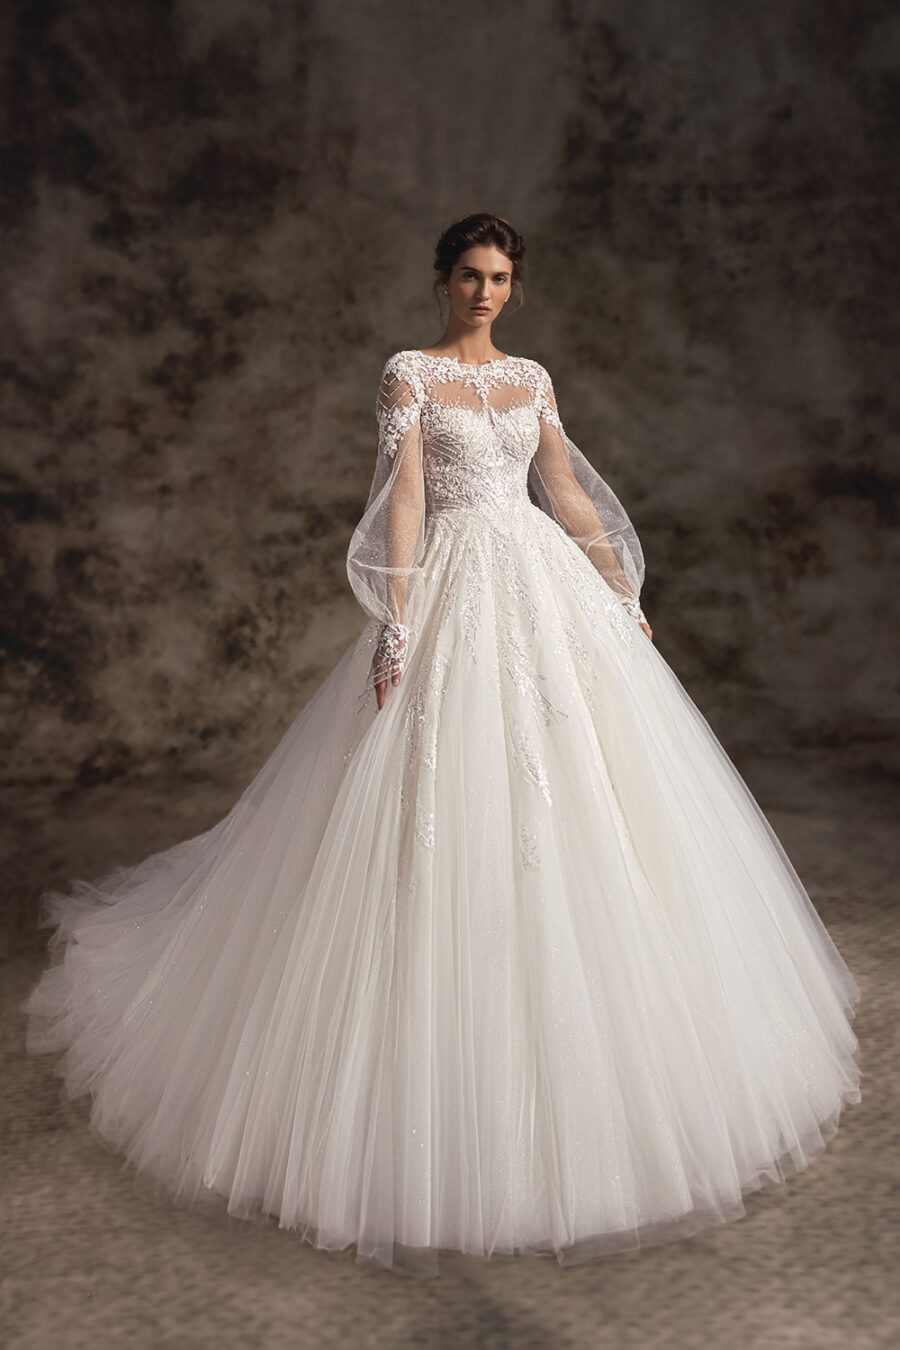 Uma 1 wedding dress by woná concept from notte d'opera collection